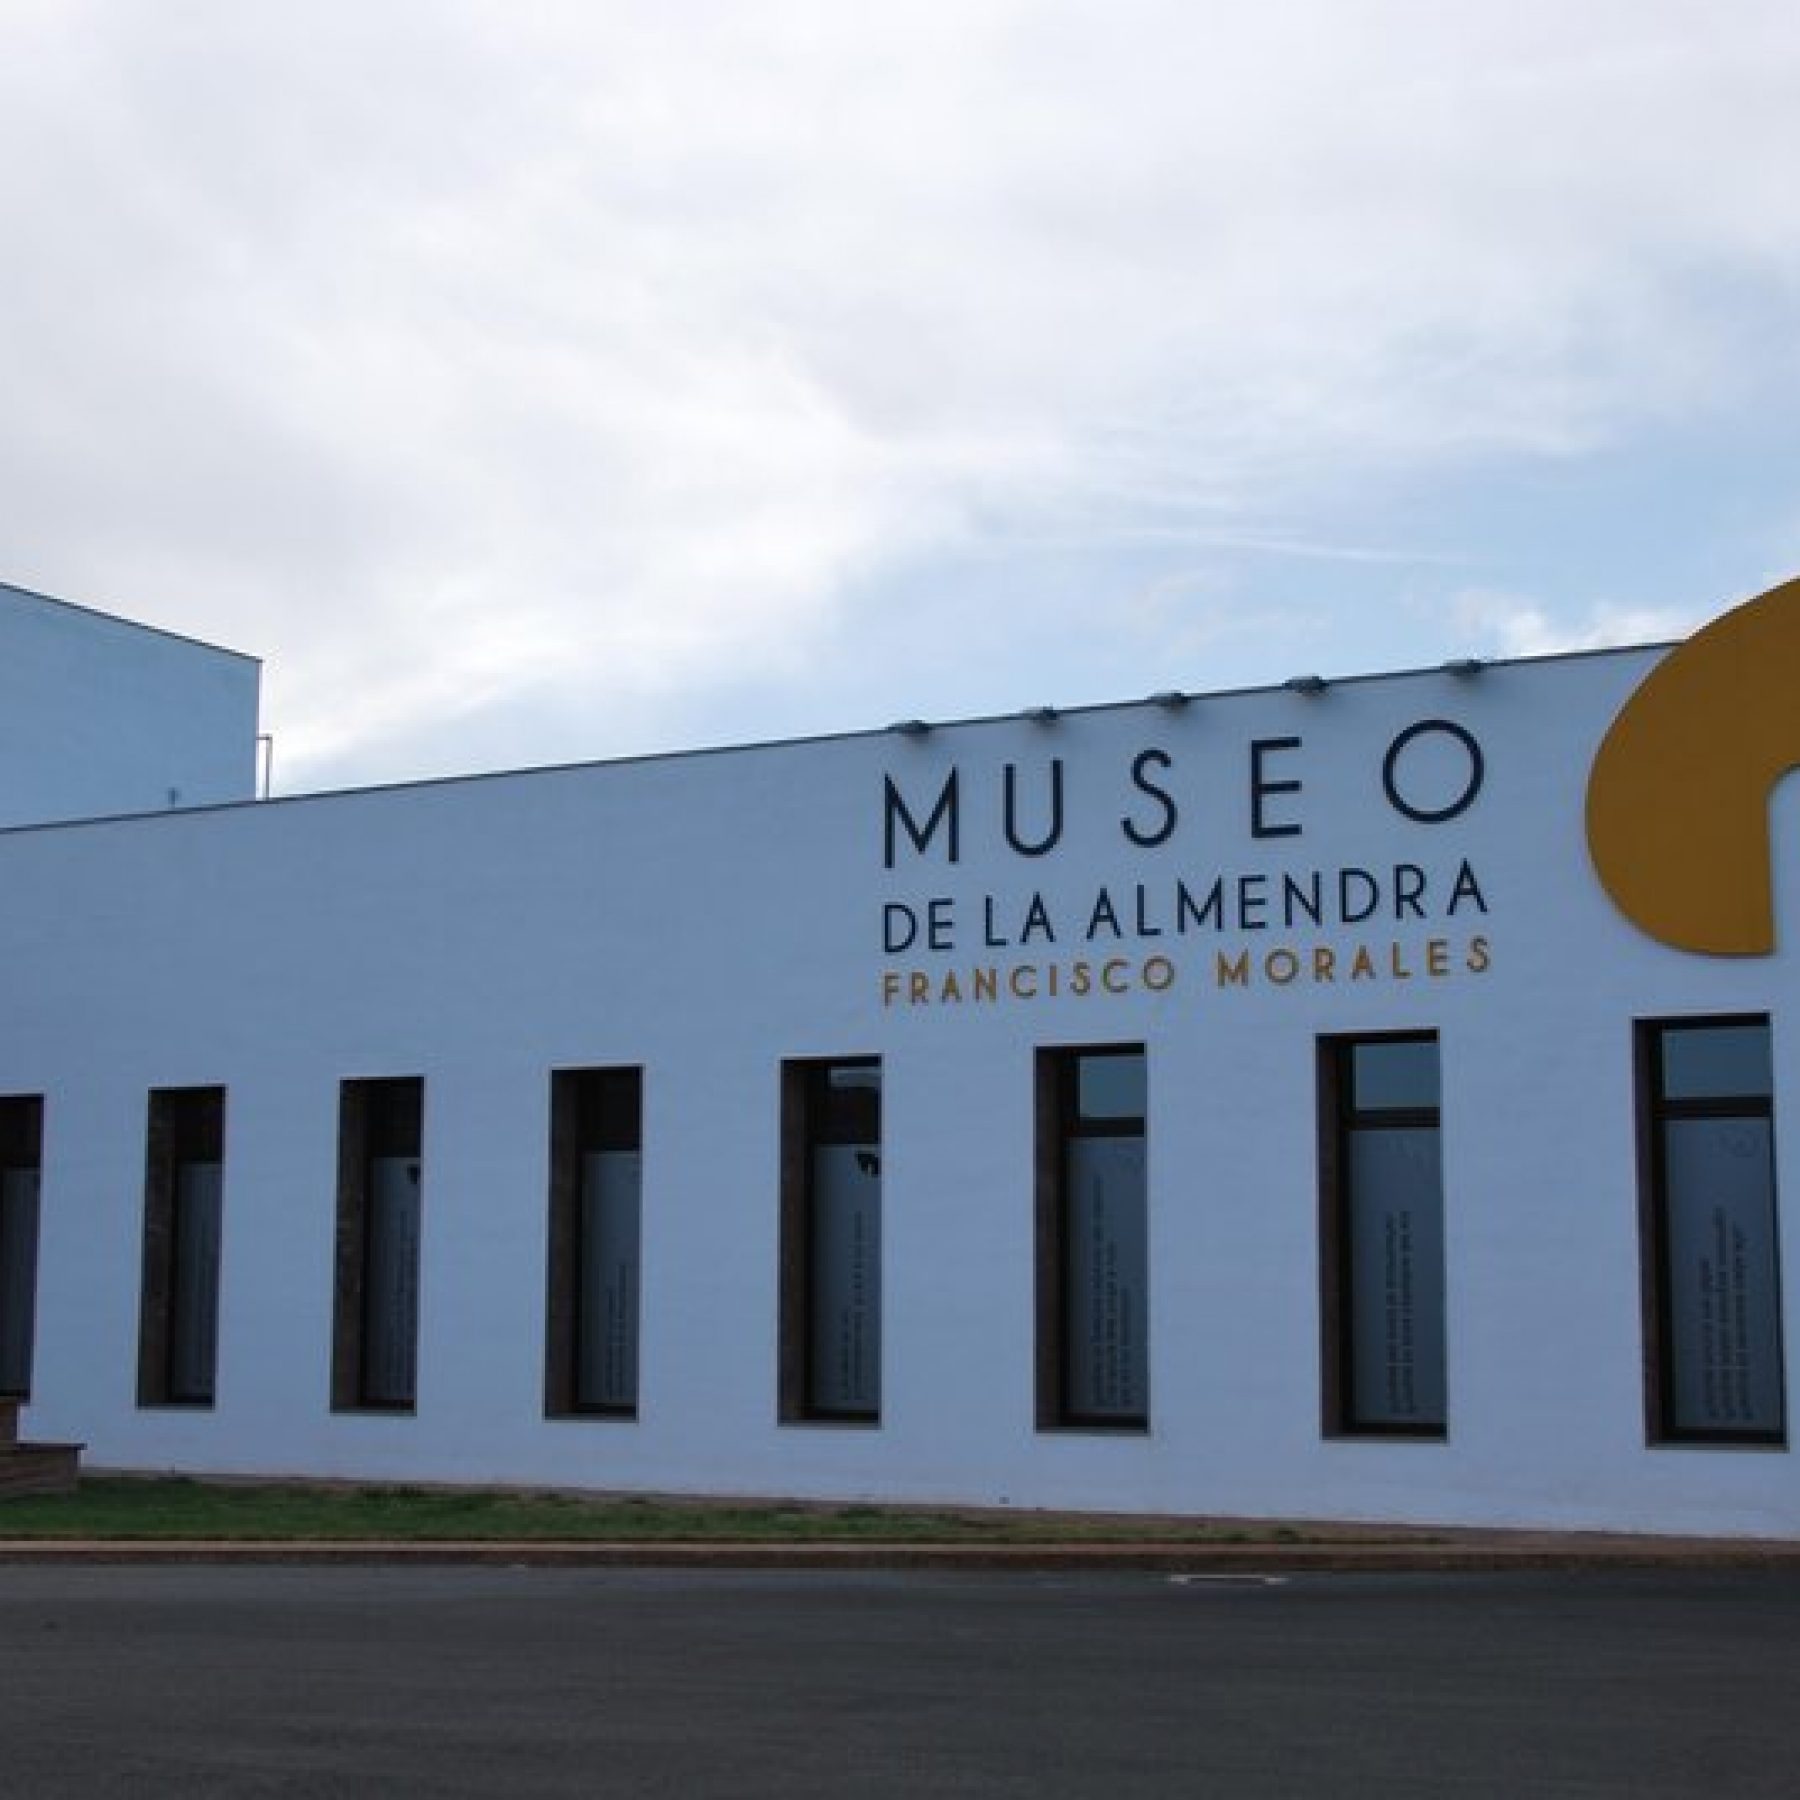 Visit to almond museum, Priego de Córdoba